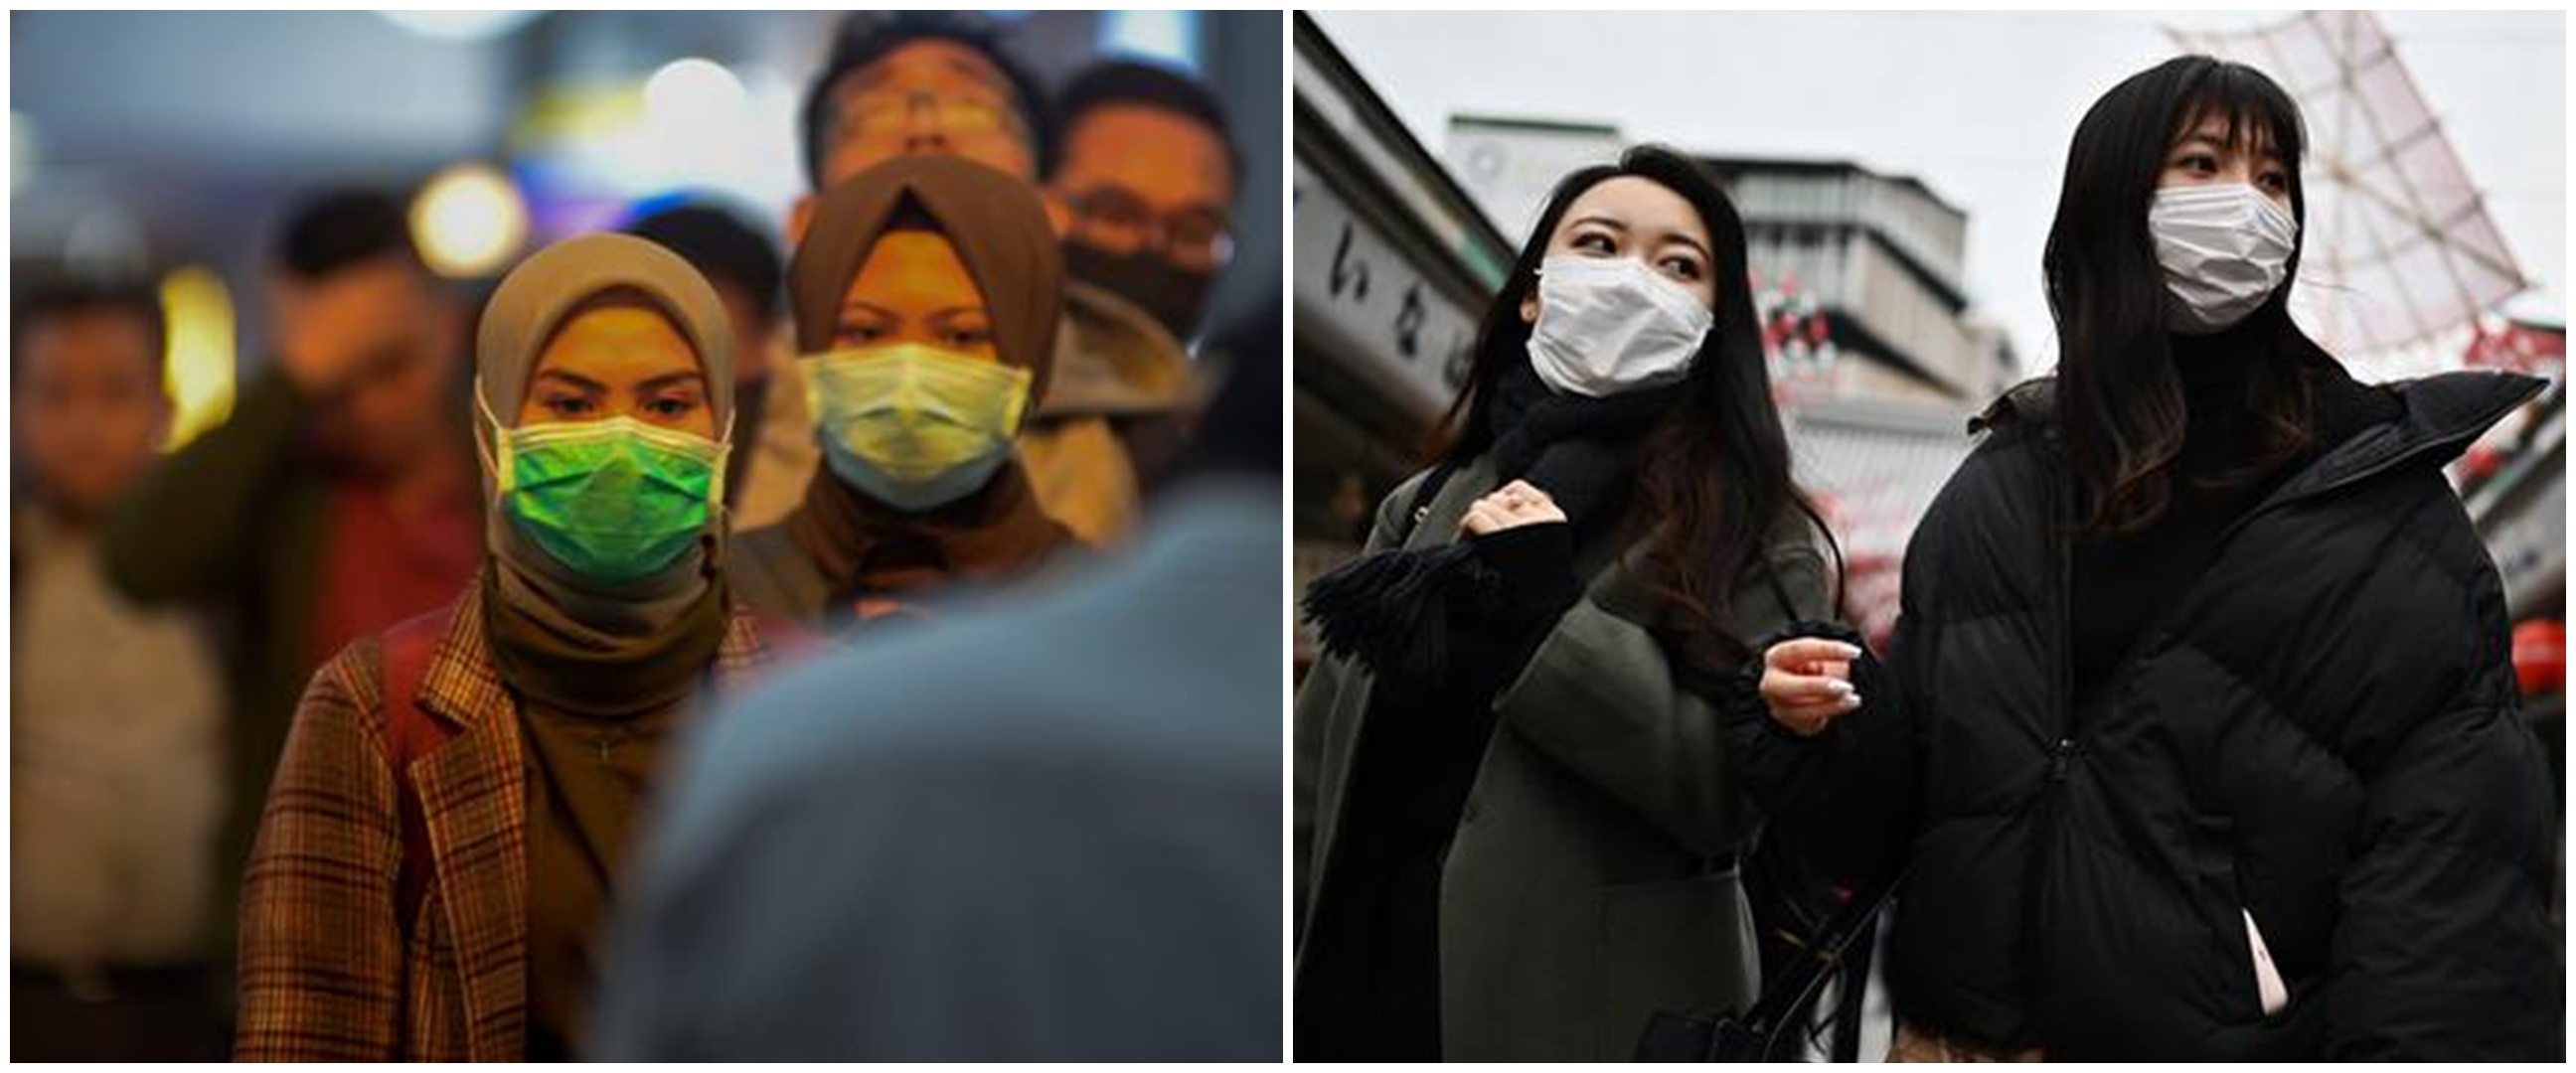 Alasan masker harus tetap dipakai meski pandemi corona usai